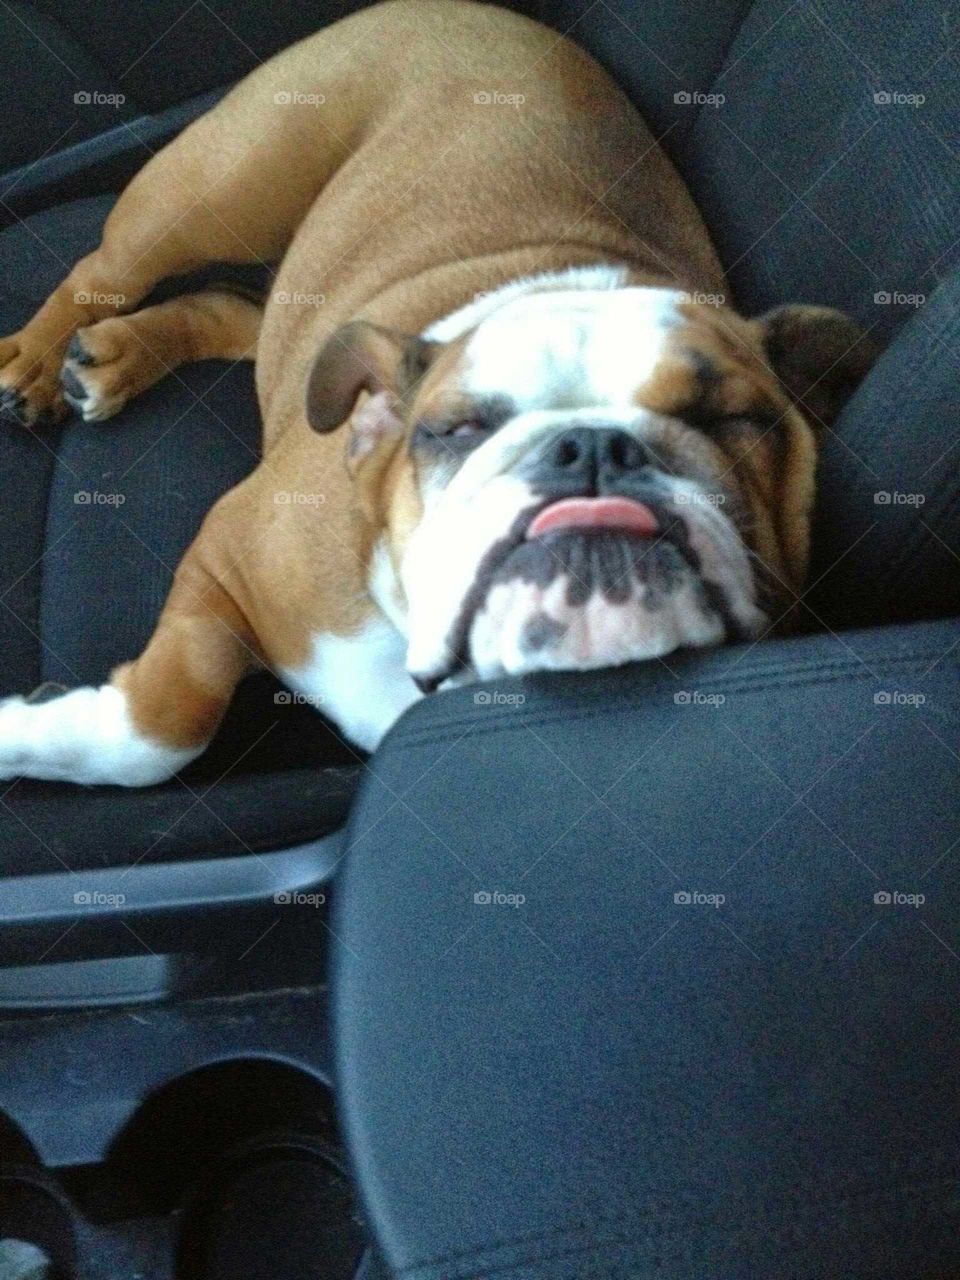 driving makes me sooooo tired!